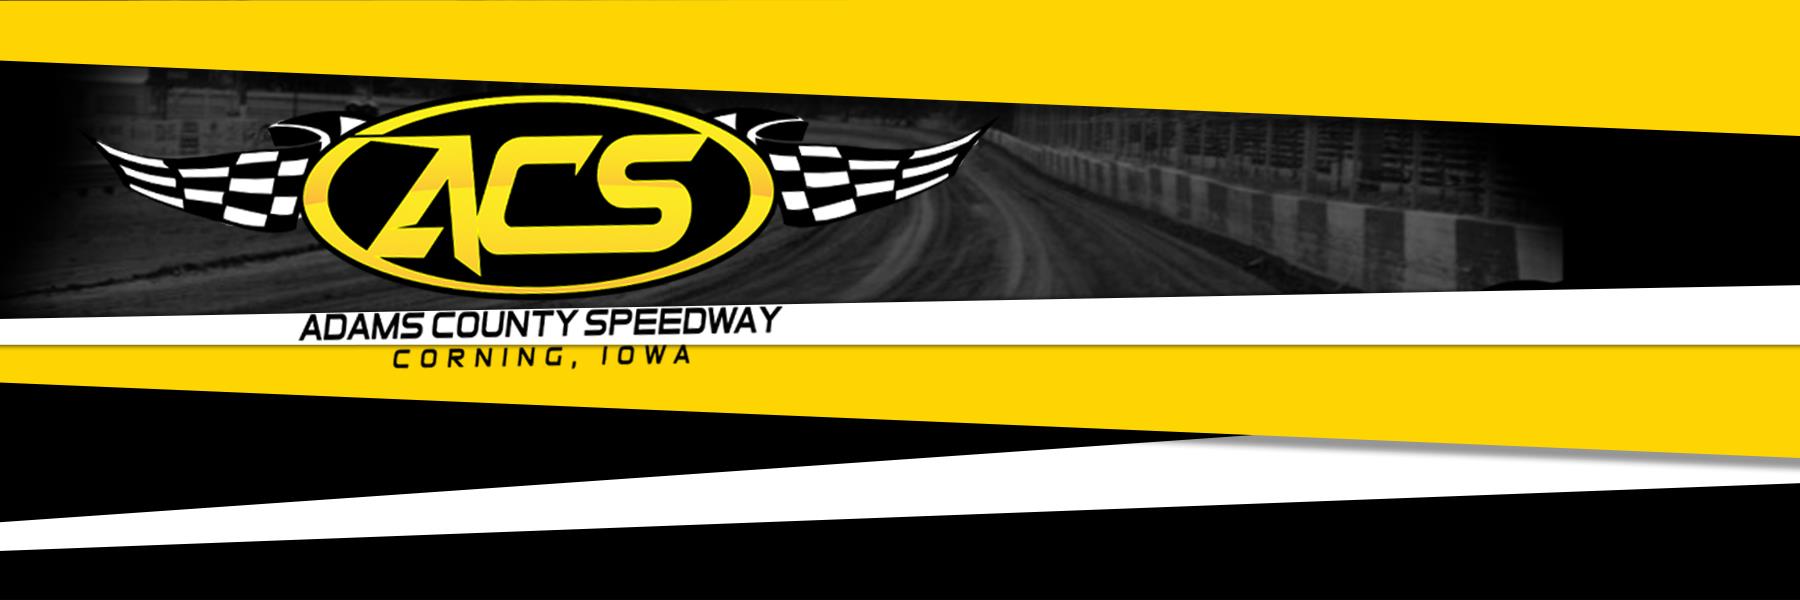 6/25/2022 - Adams County Speedway